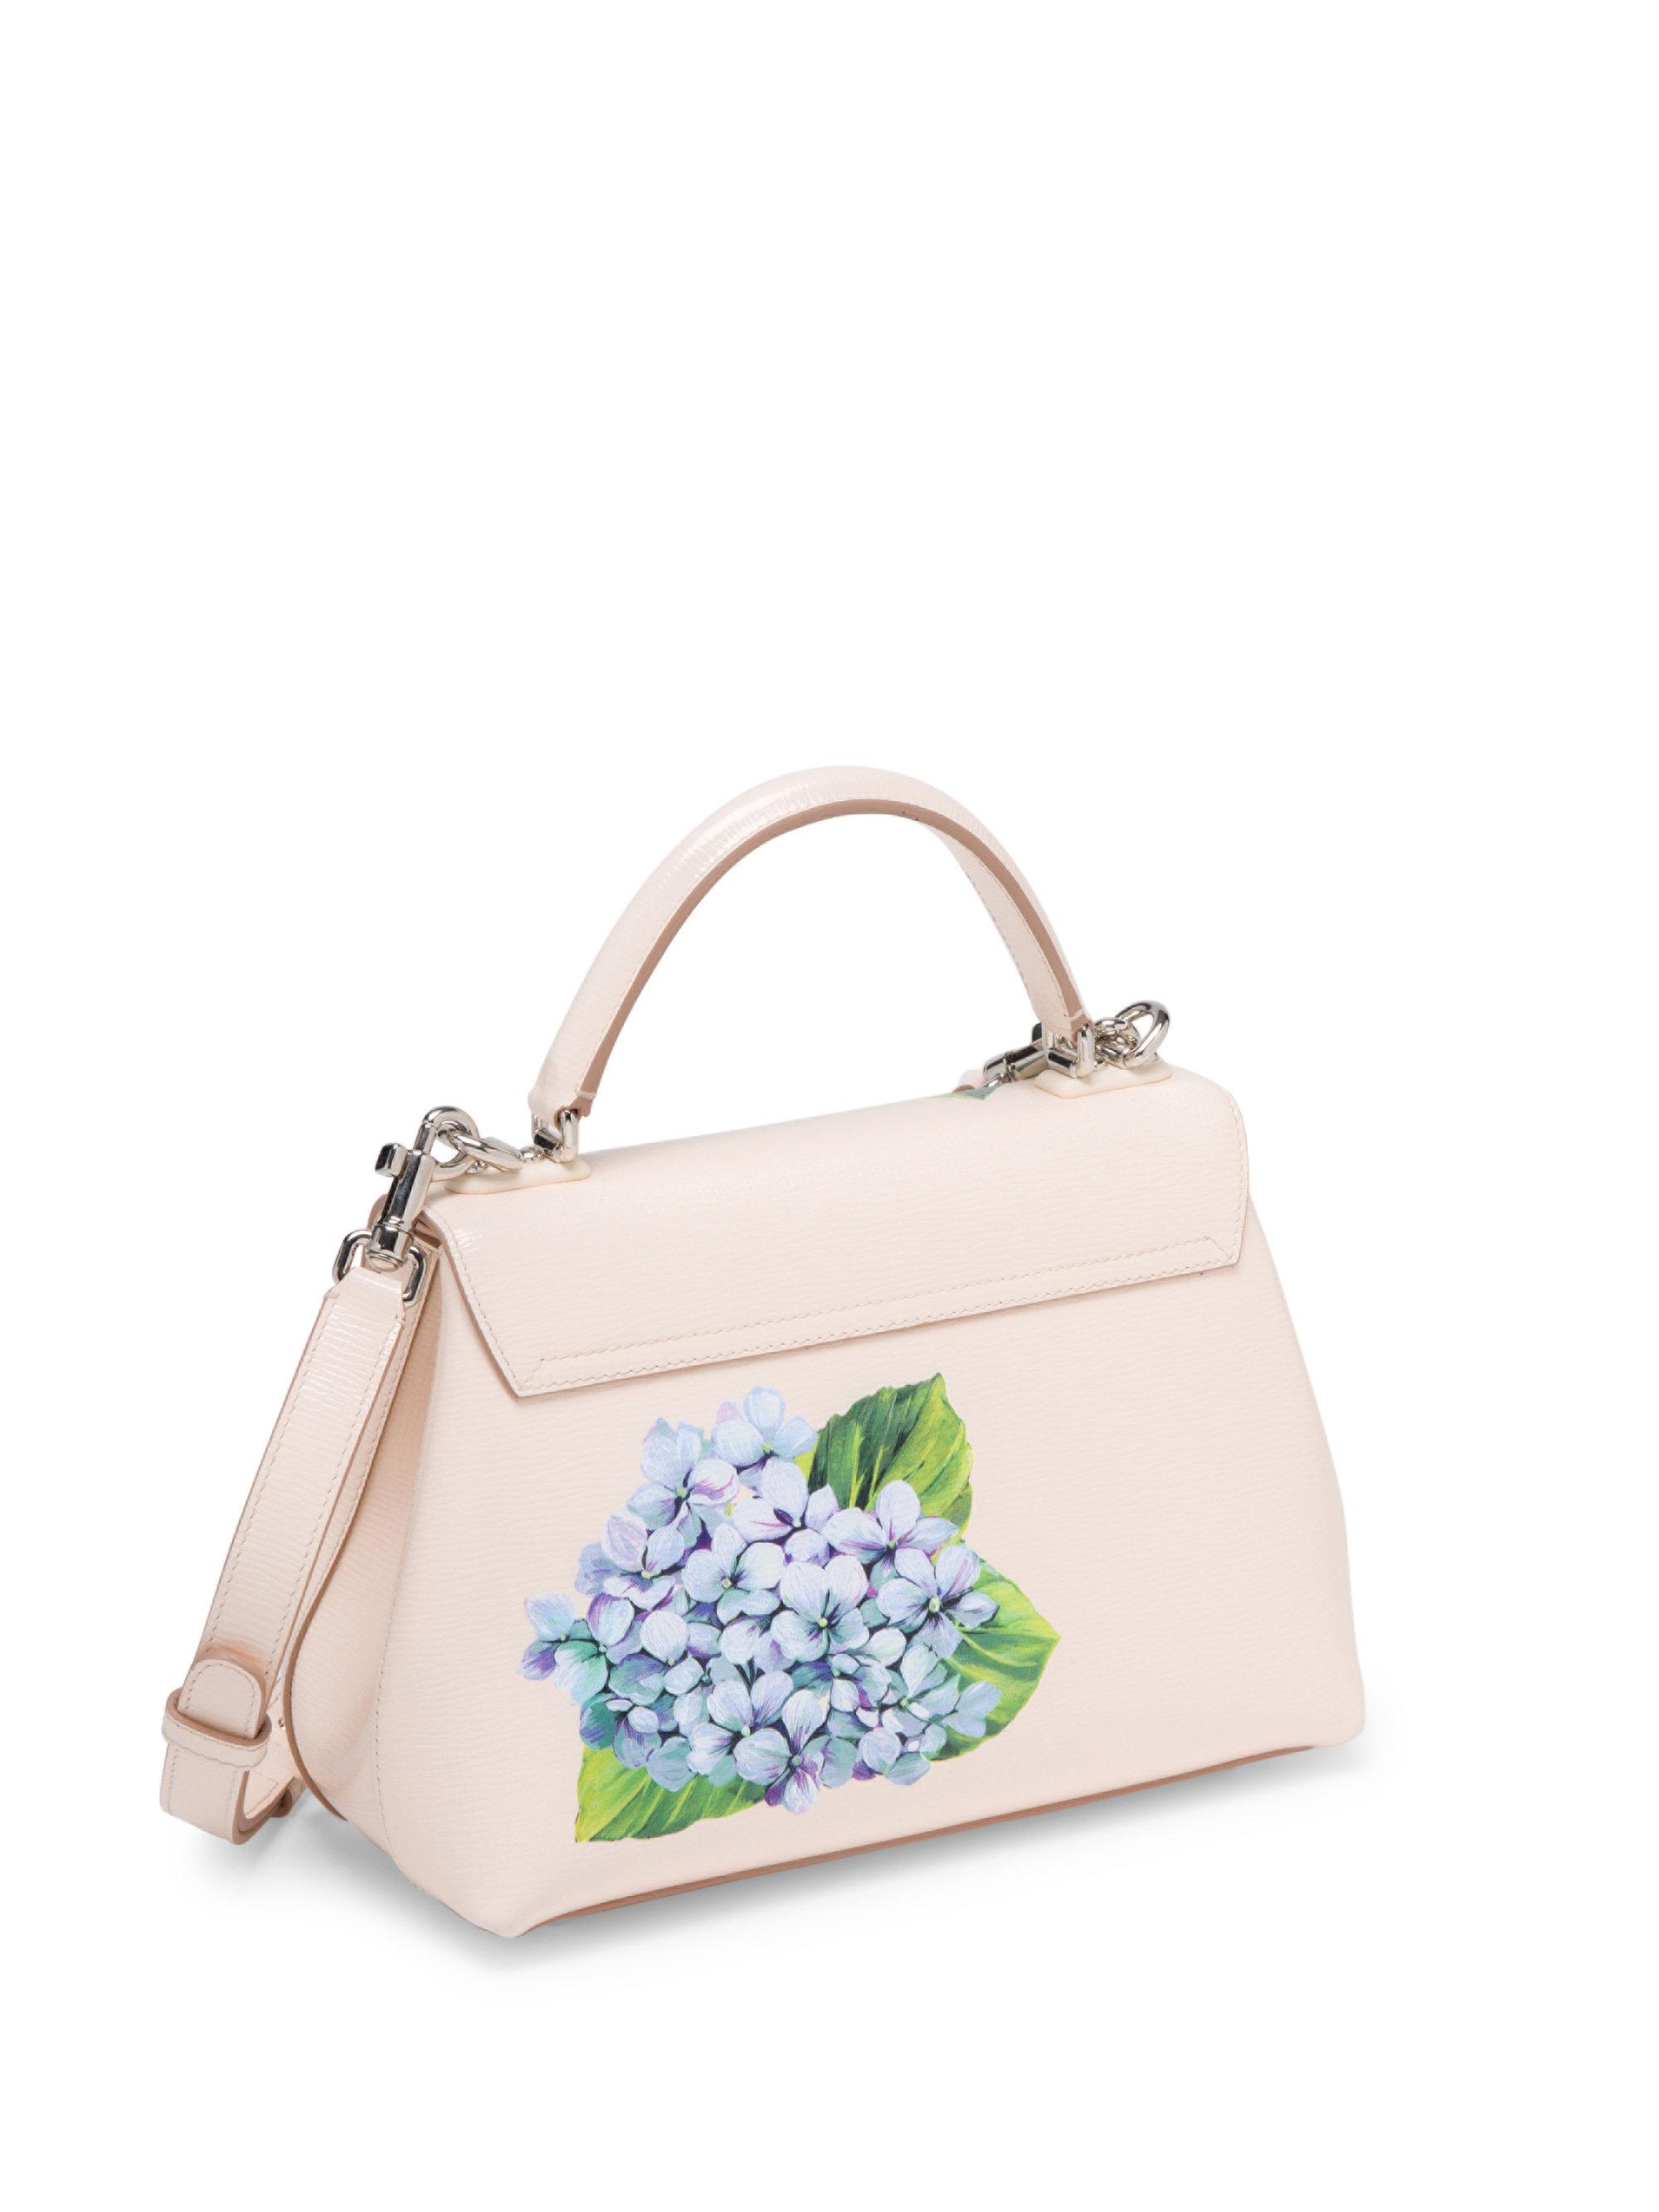 Lyst - Dolce & Gabbana Lucia Hydrangea-print Leather Top Handle Bag